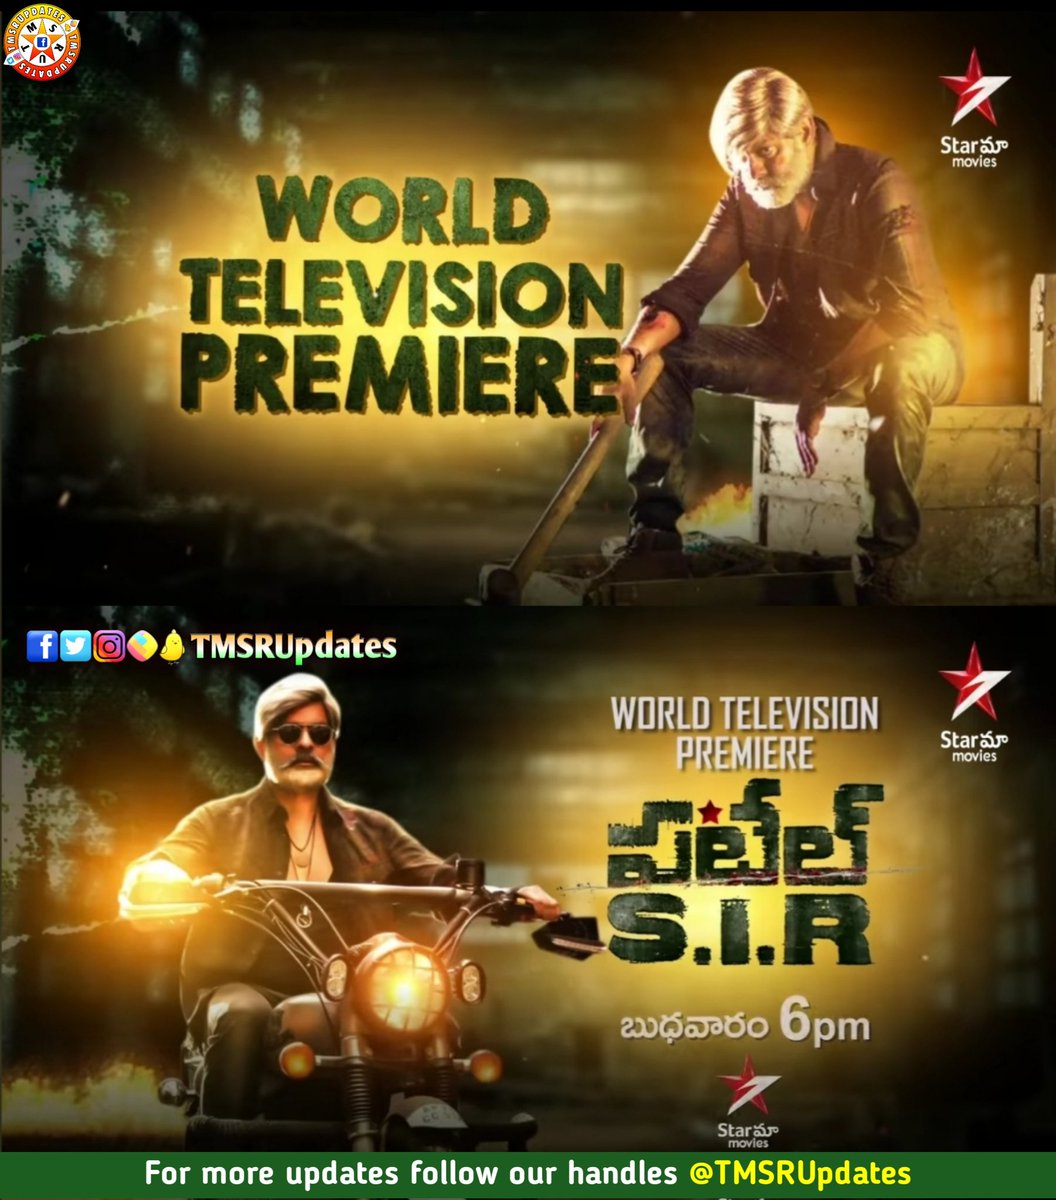 #TMSRUpdates

World Television Premiere
#JagapathiBabu's
#PatelSir

Tomorrow at 6 PM On #StarMaaMovies
#PatelSirOnStarMaaMovies 

@IamJagguBhai @StarMaaMovies